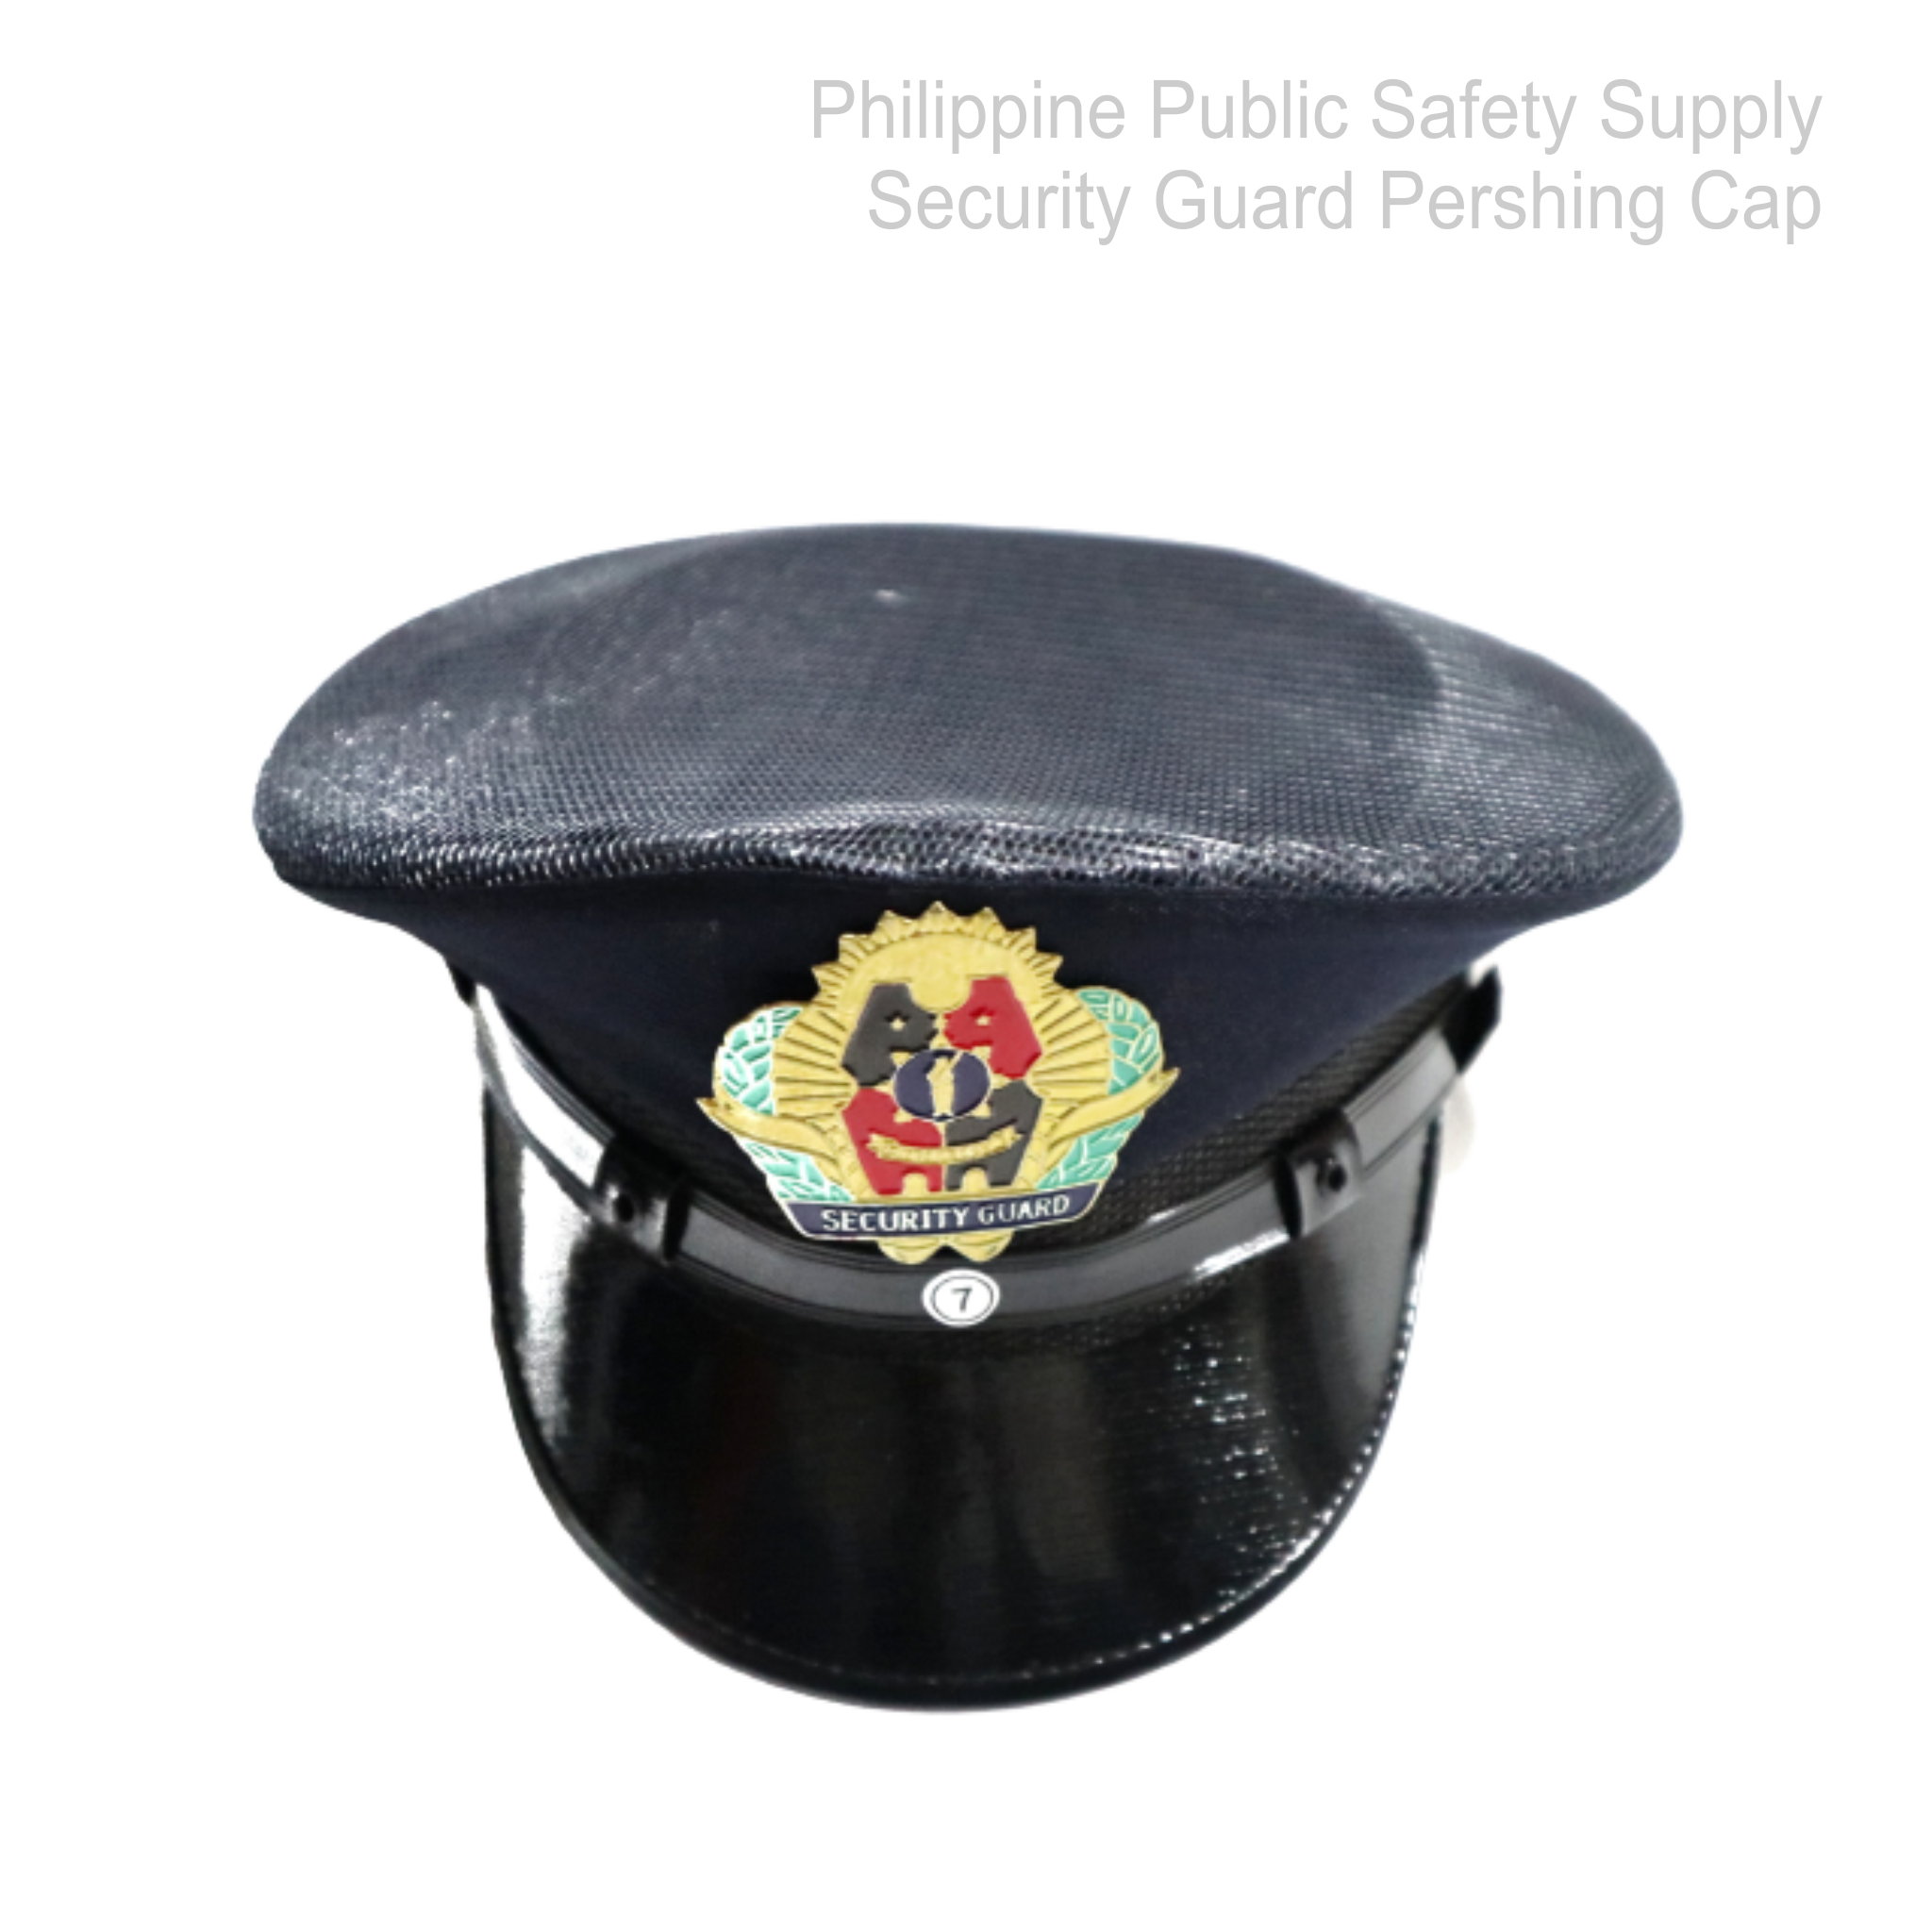 Security Guard Pershing Cap - PSA-SG